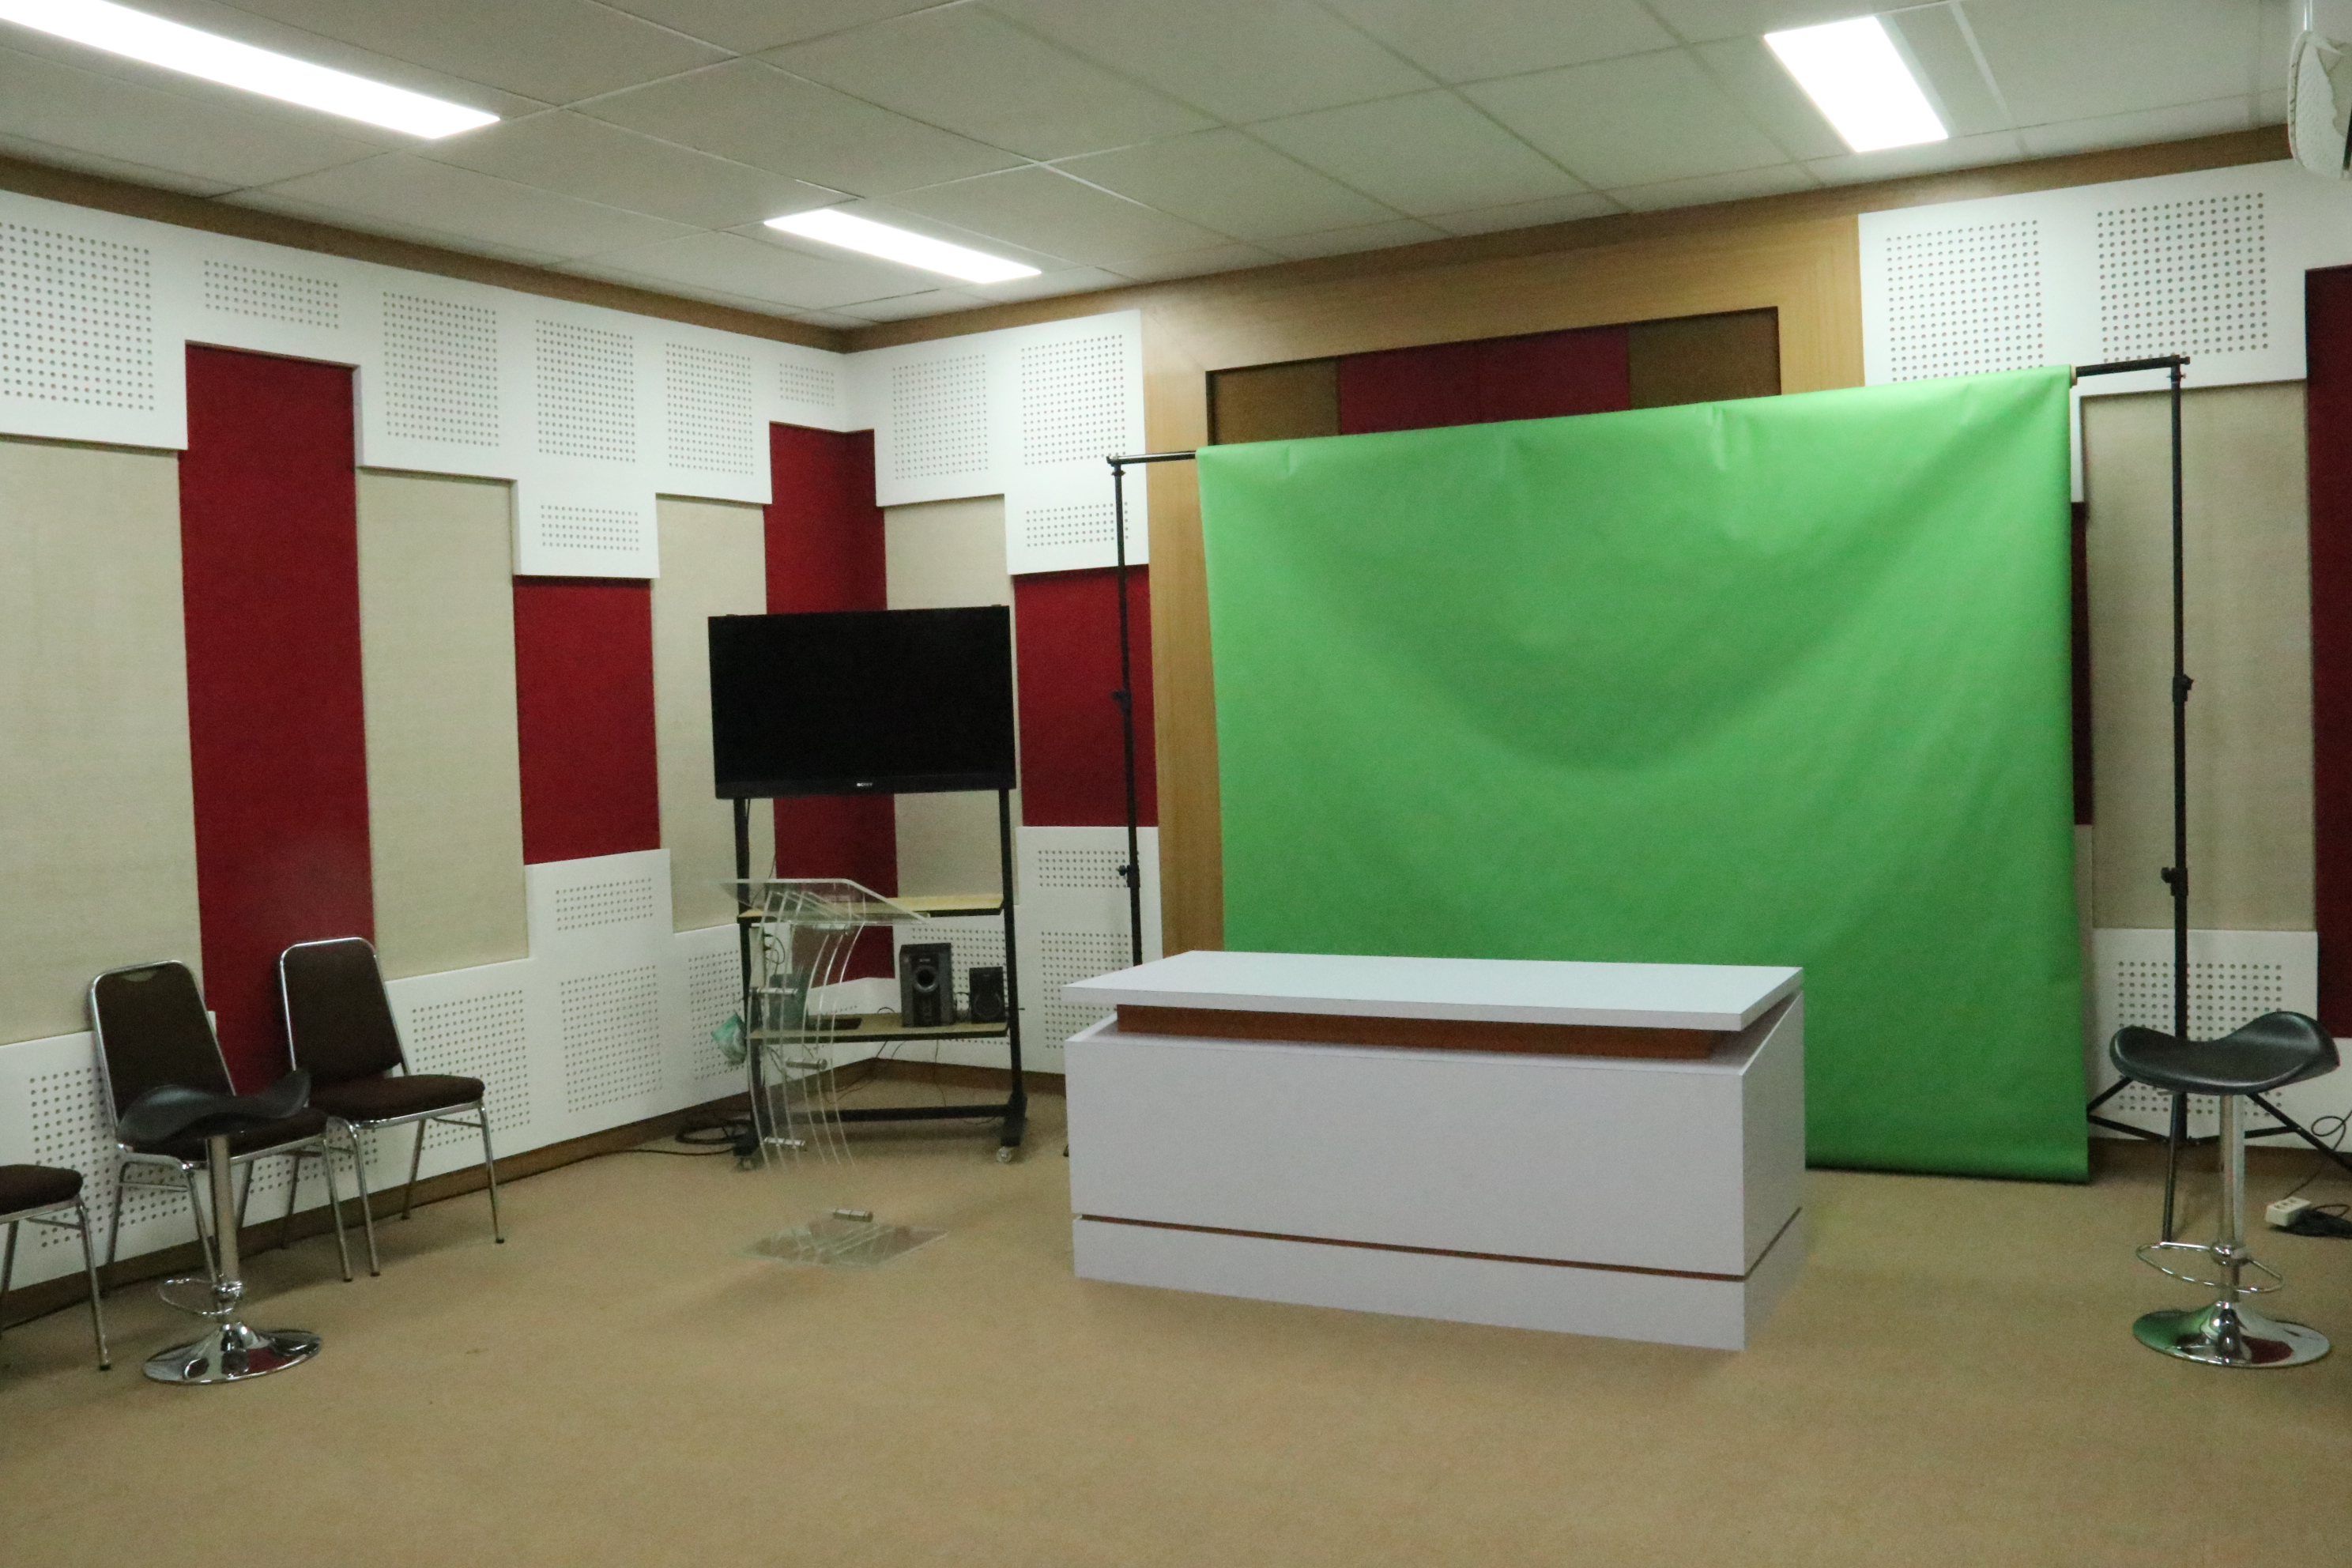 Mini studio equipped with green screen